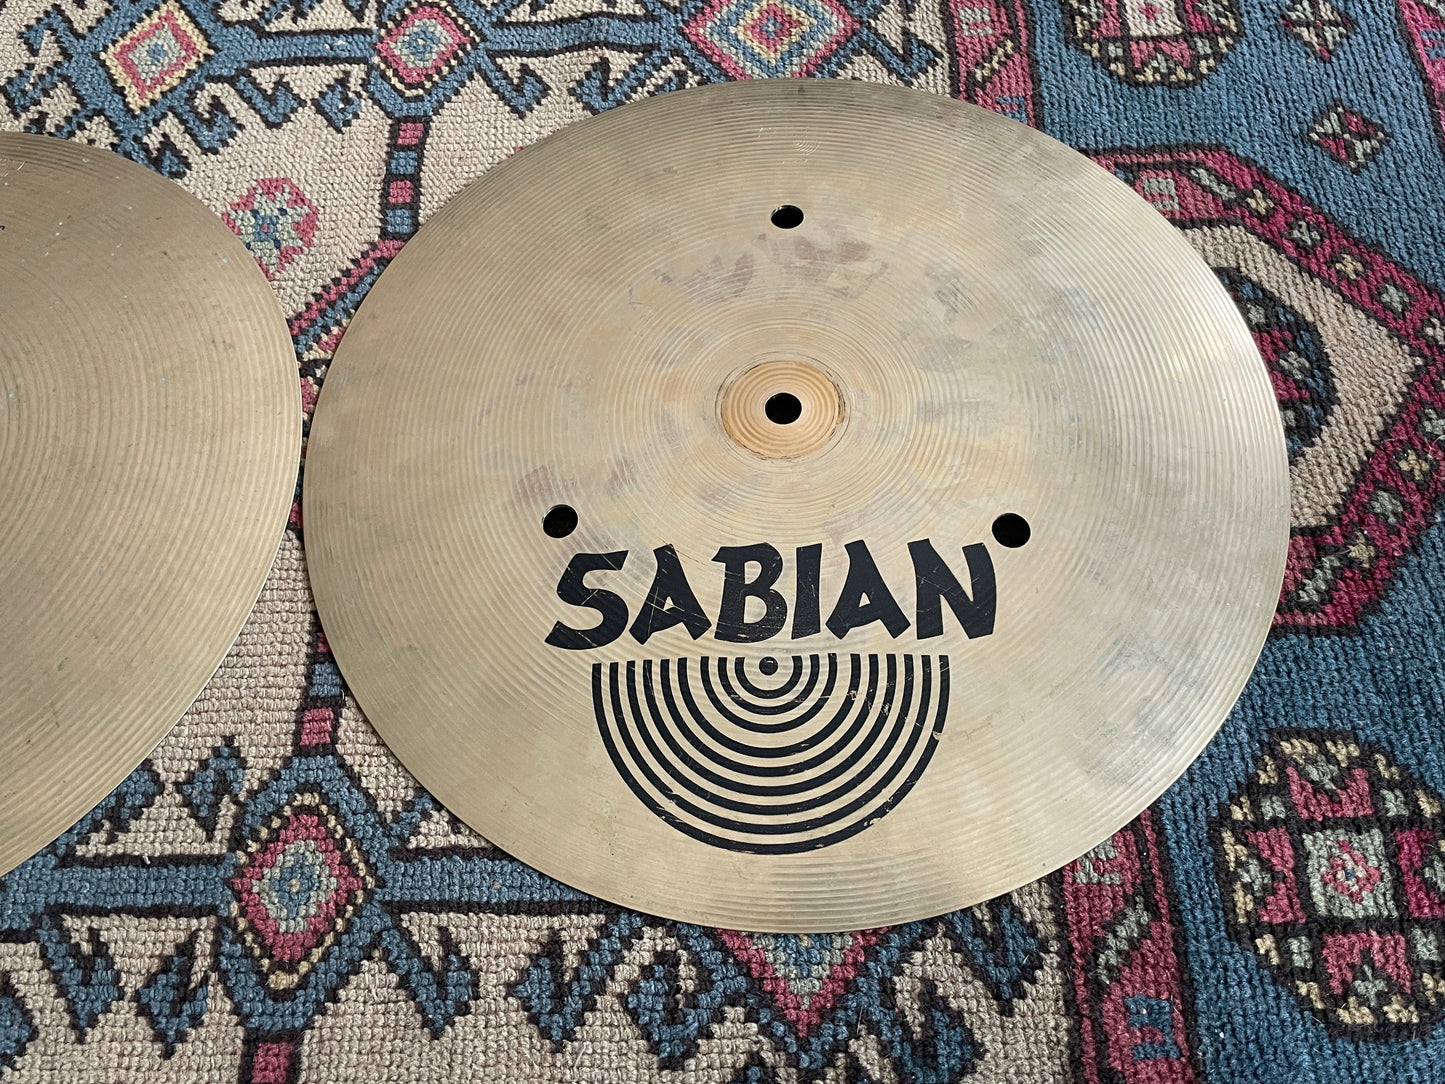 14" Sabian AA Flat Hats Hi-Hat Cymbal Pair 1052g/1460g